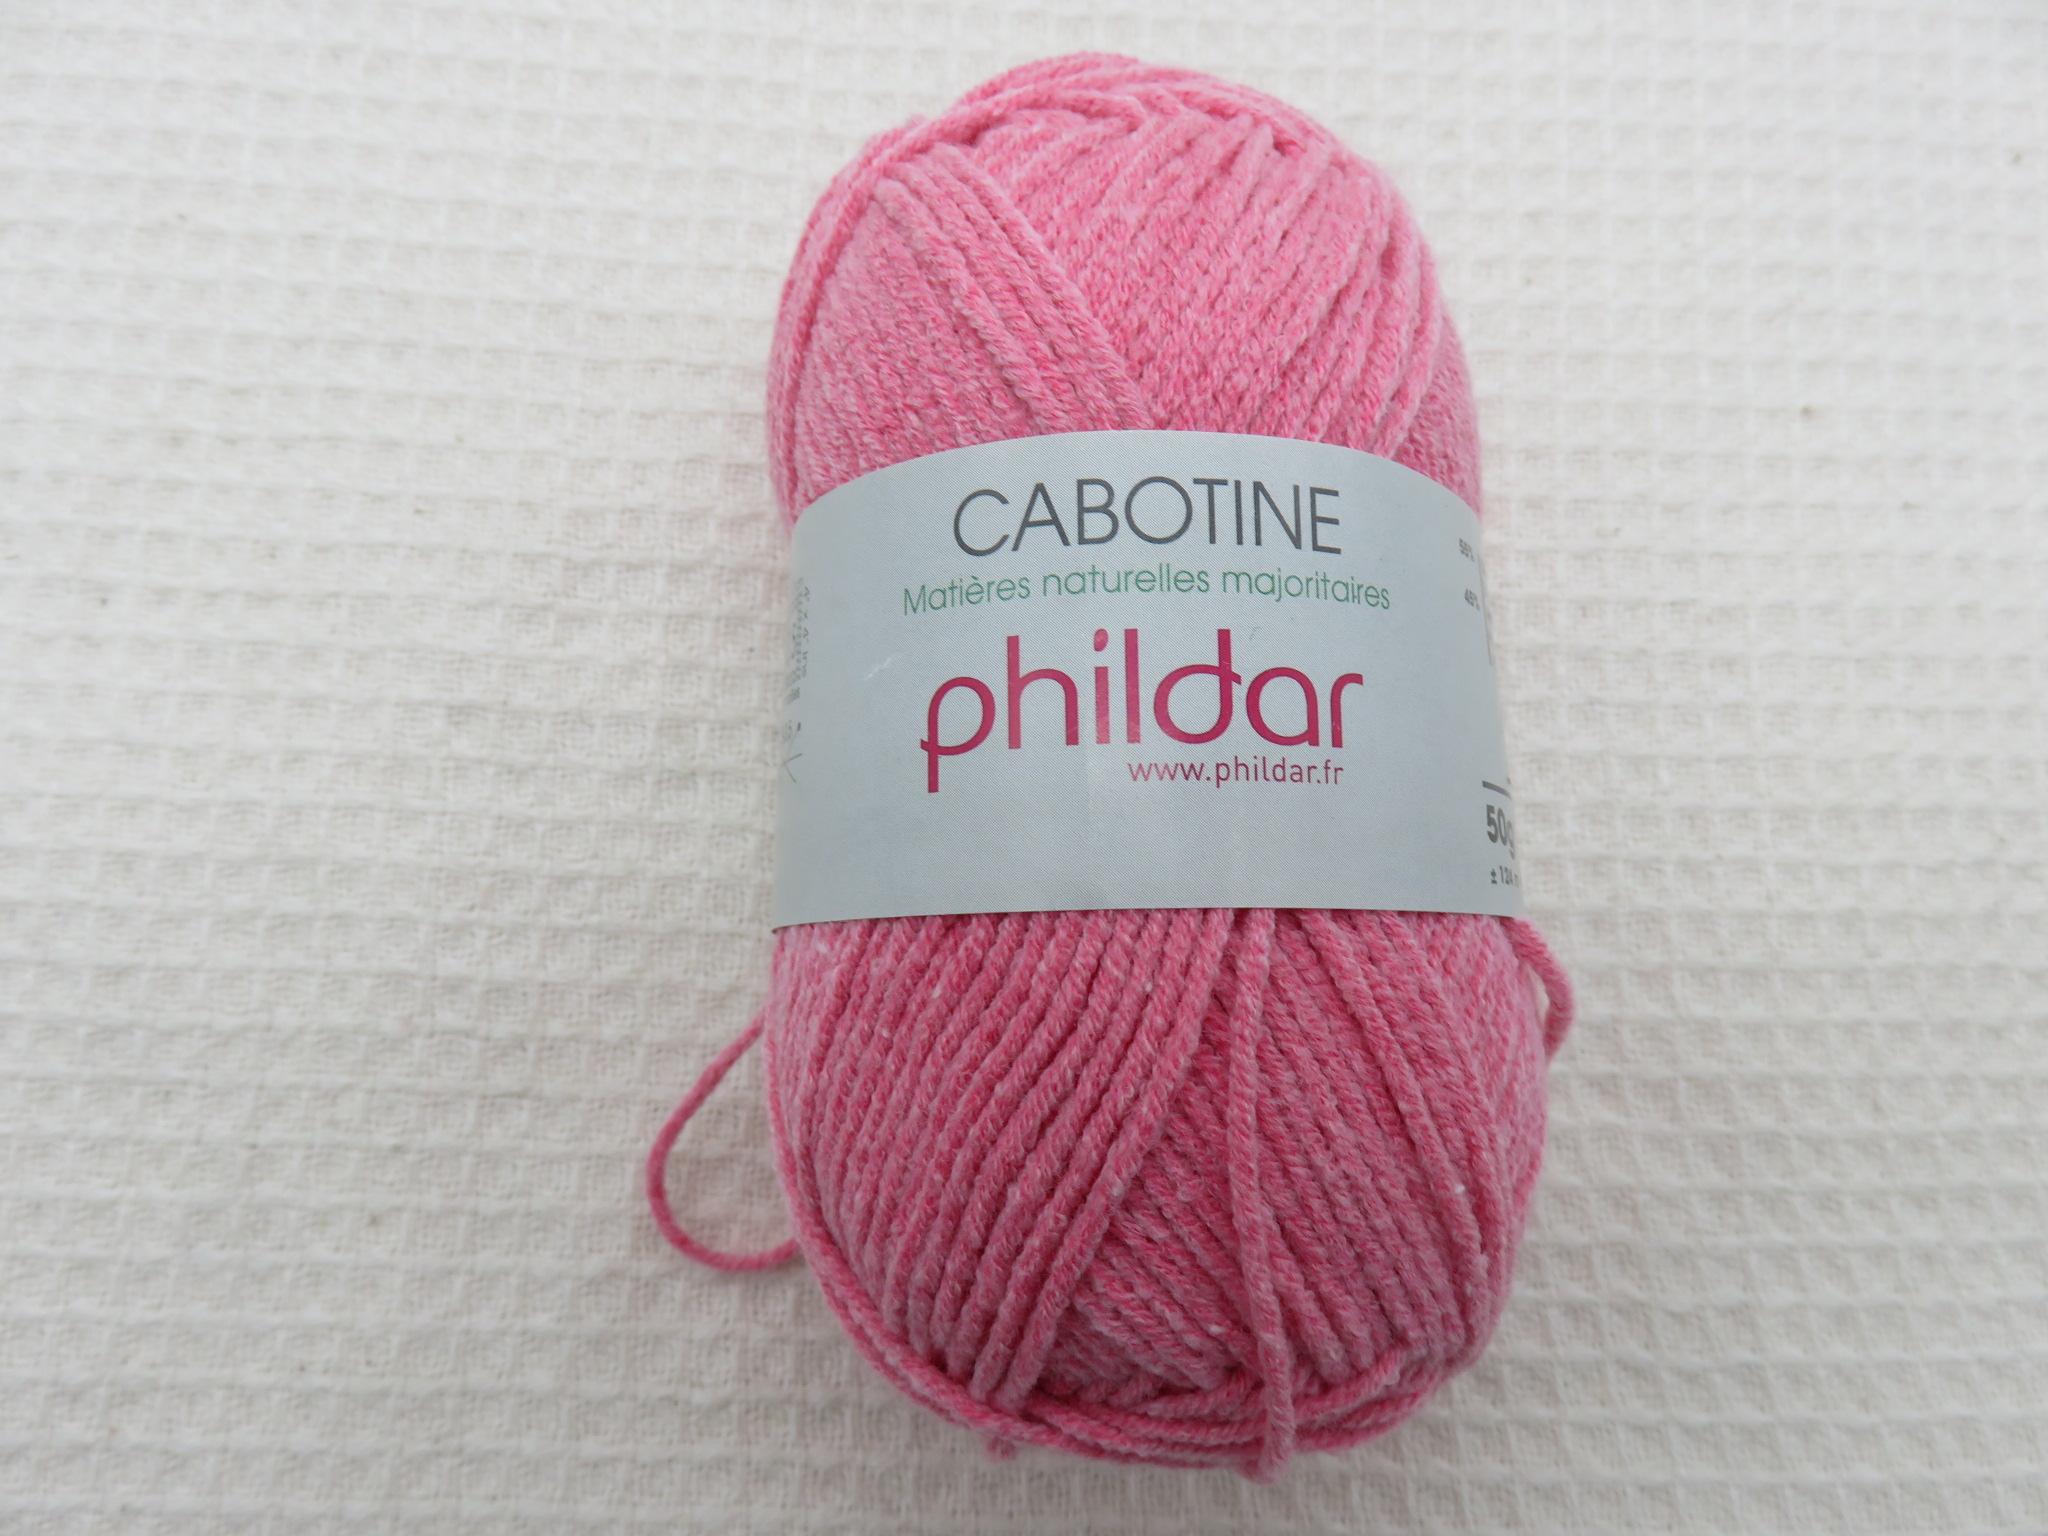 Pelote Cabotine oeillet Phildar coton acrylique